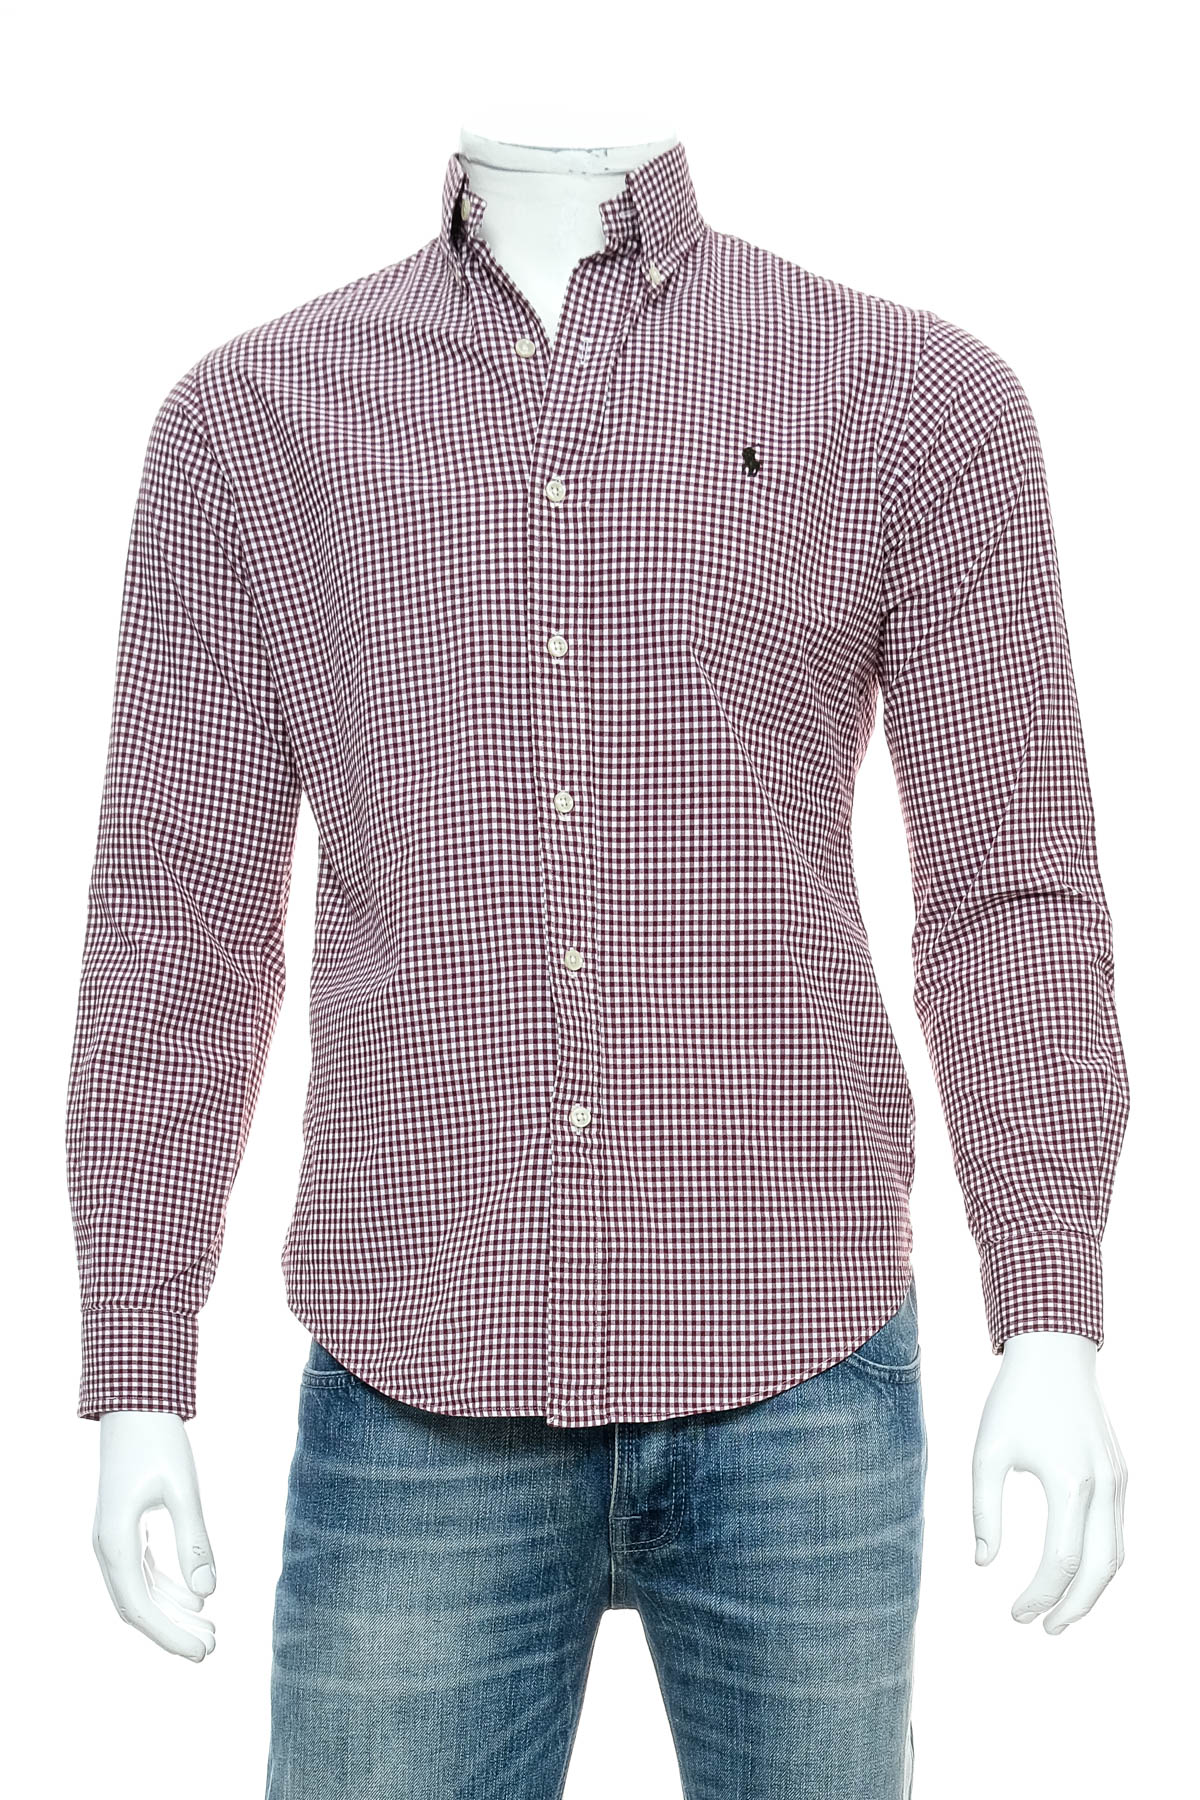 Men's shirt - Ralph Lauren - 0